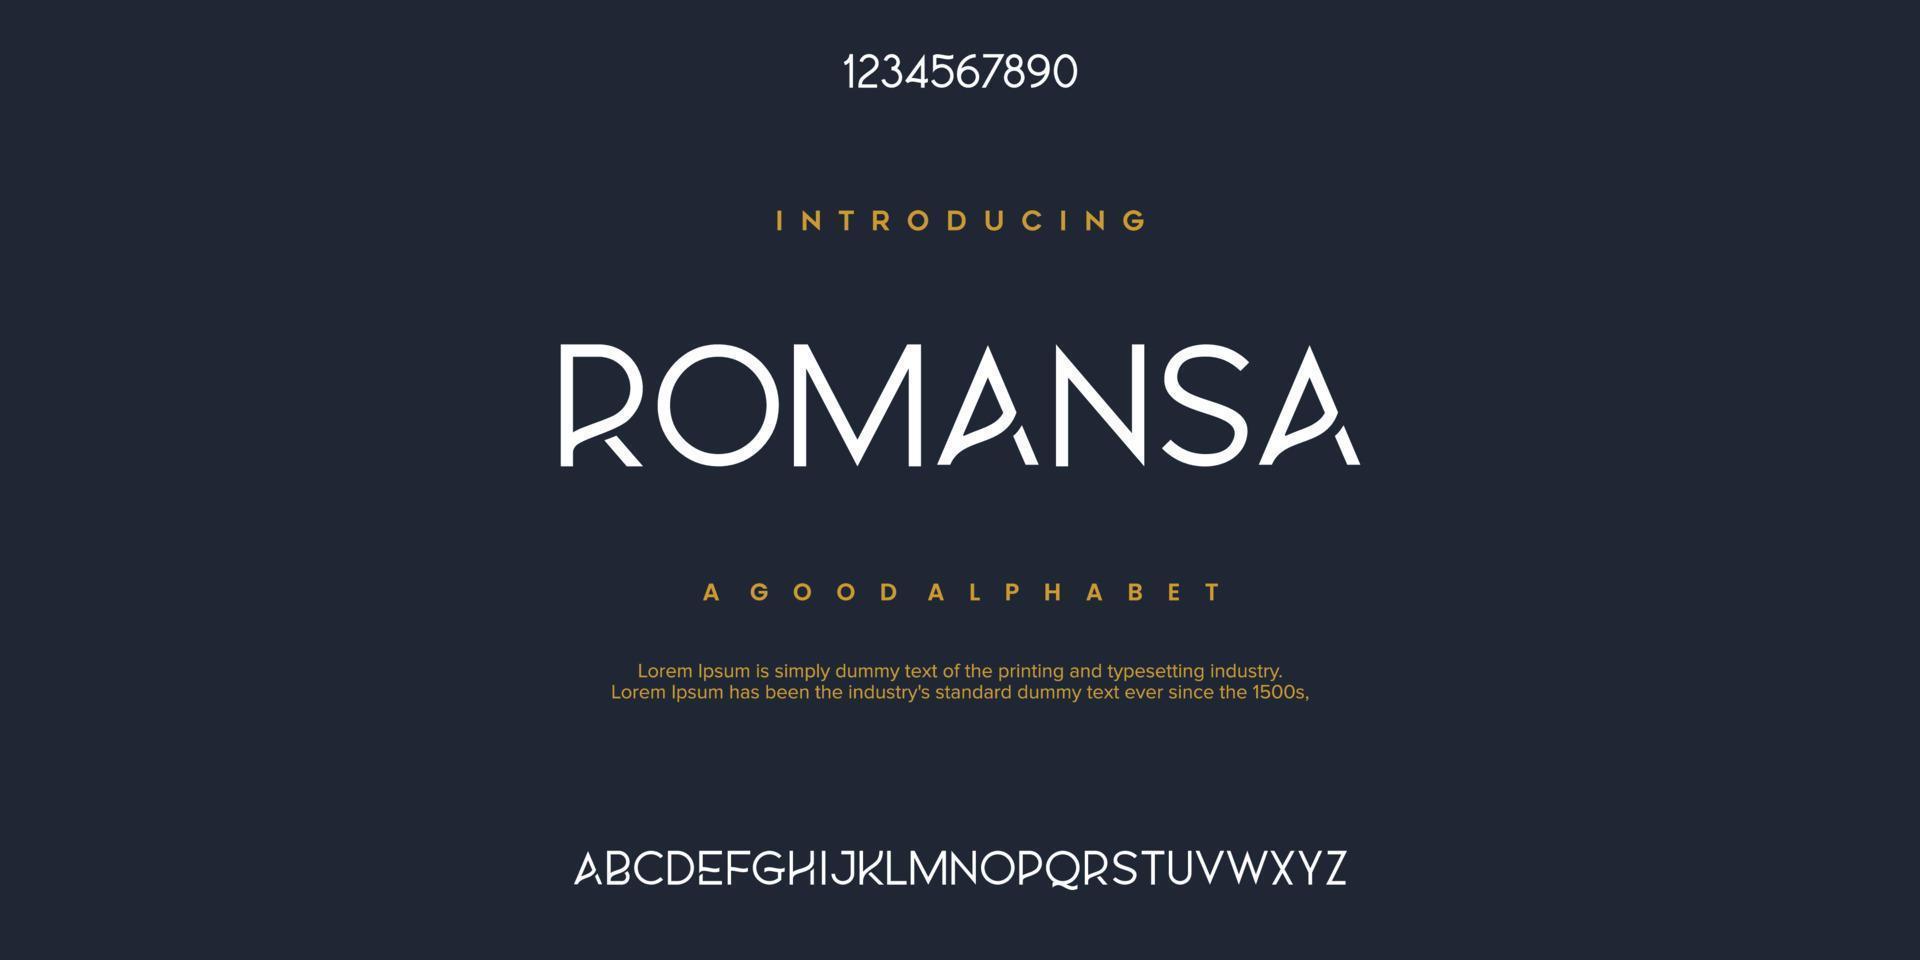 ROMANSA Abstract minimal modern alphabet fonts. Typography technology vector illustration